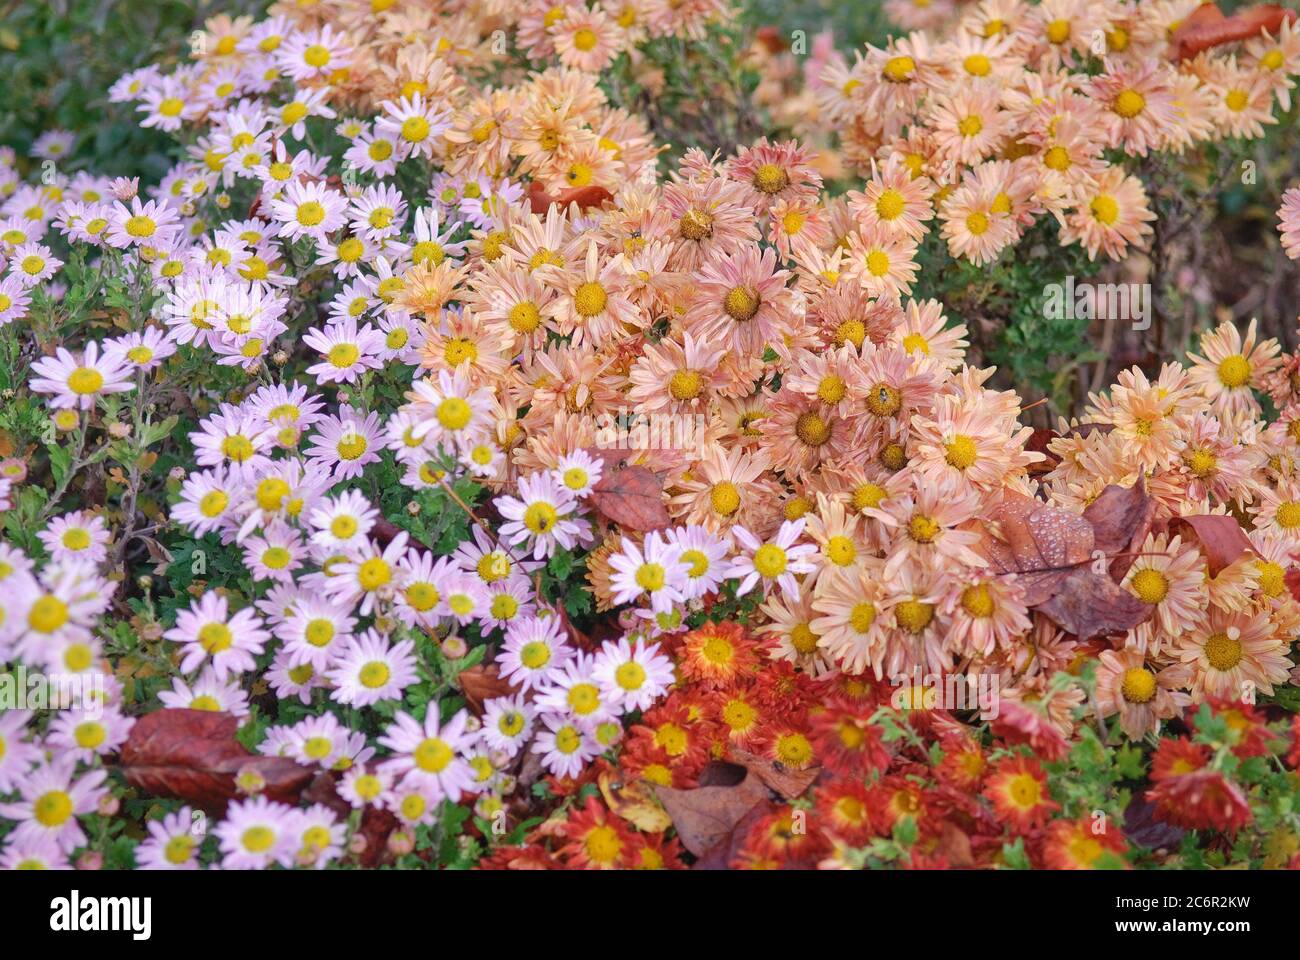 Chrysantheme Chrysanthemum Kleiner Bernstein, Chrysantheme Chrysanthemum Hebe, Chrysantheme Chrysanthemum Rumpelstilzchen, Chrysanthemum Chrysanthemum Stock Photo